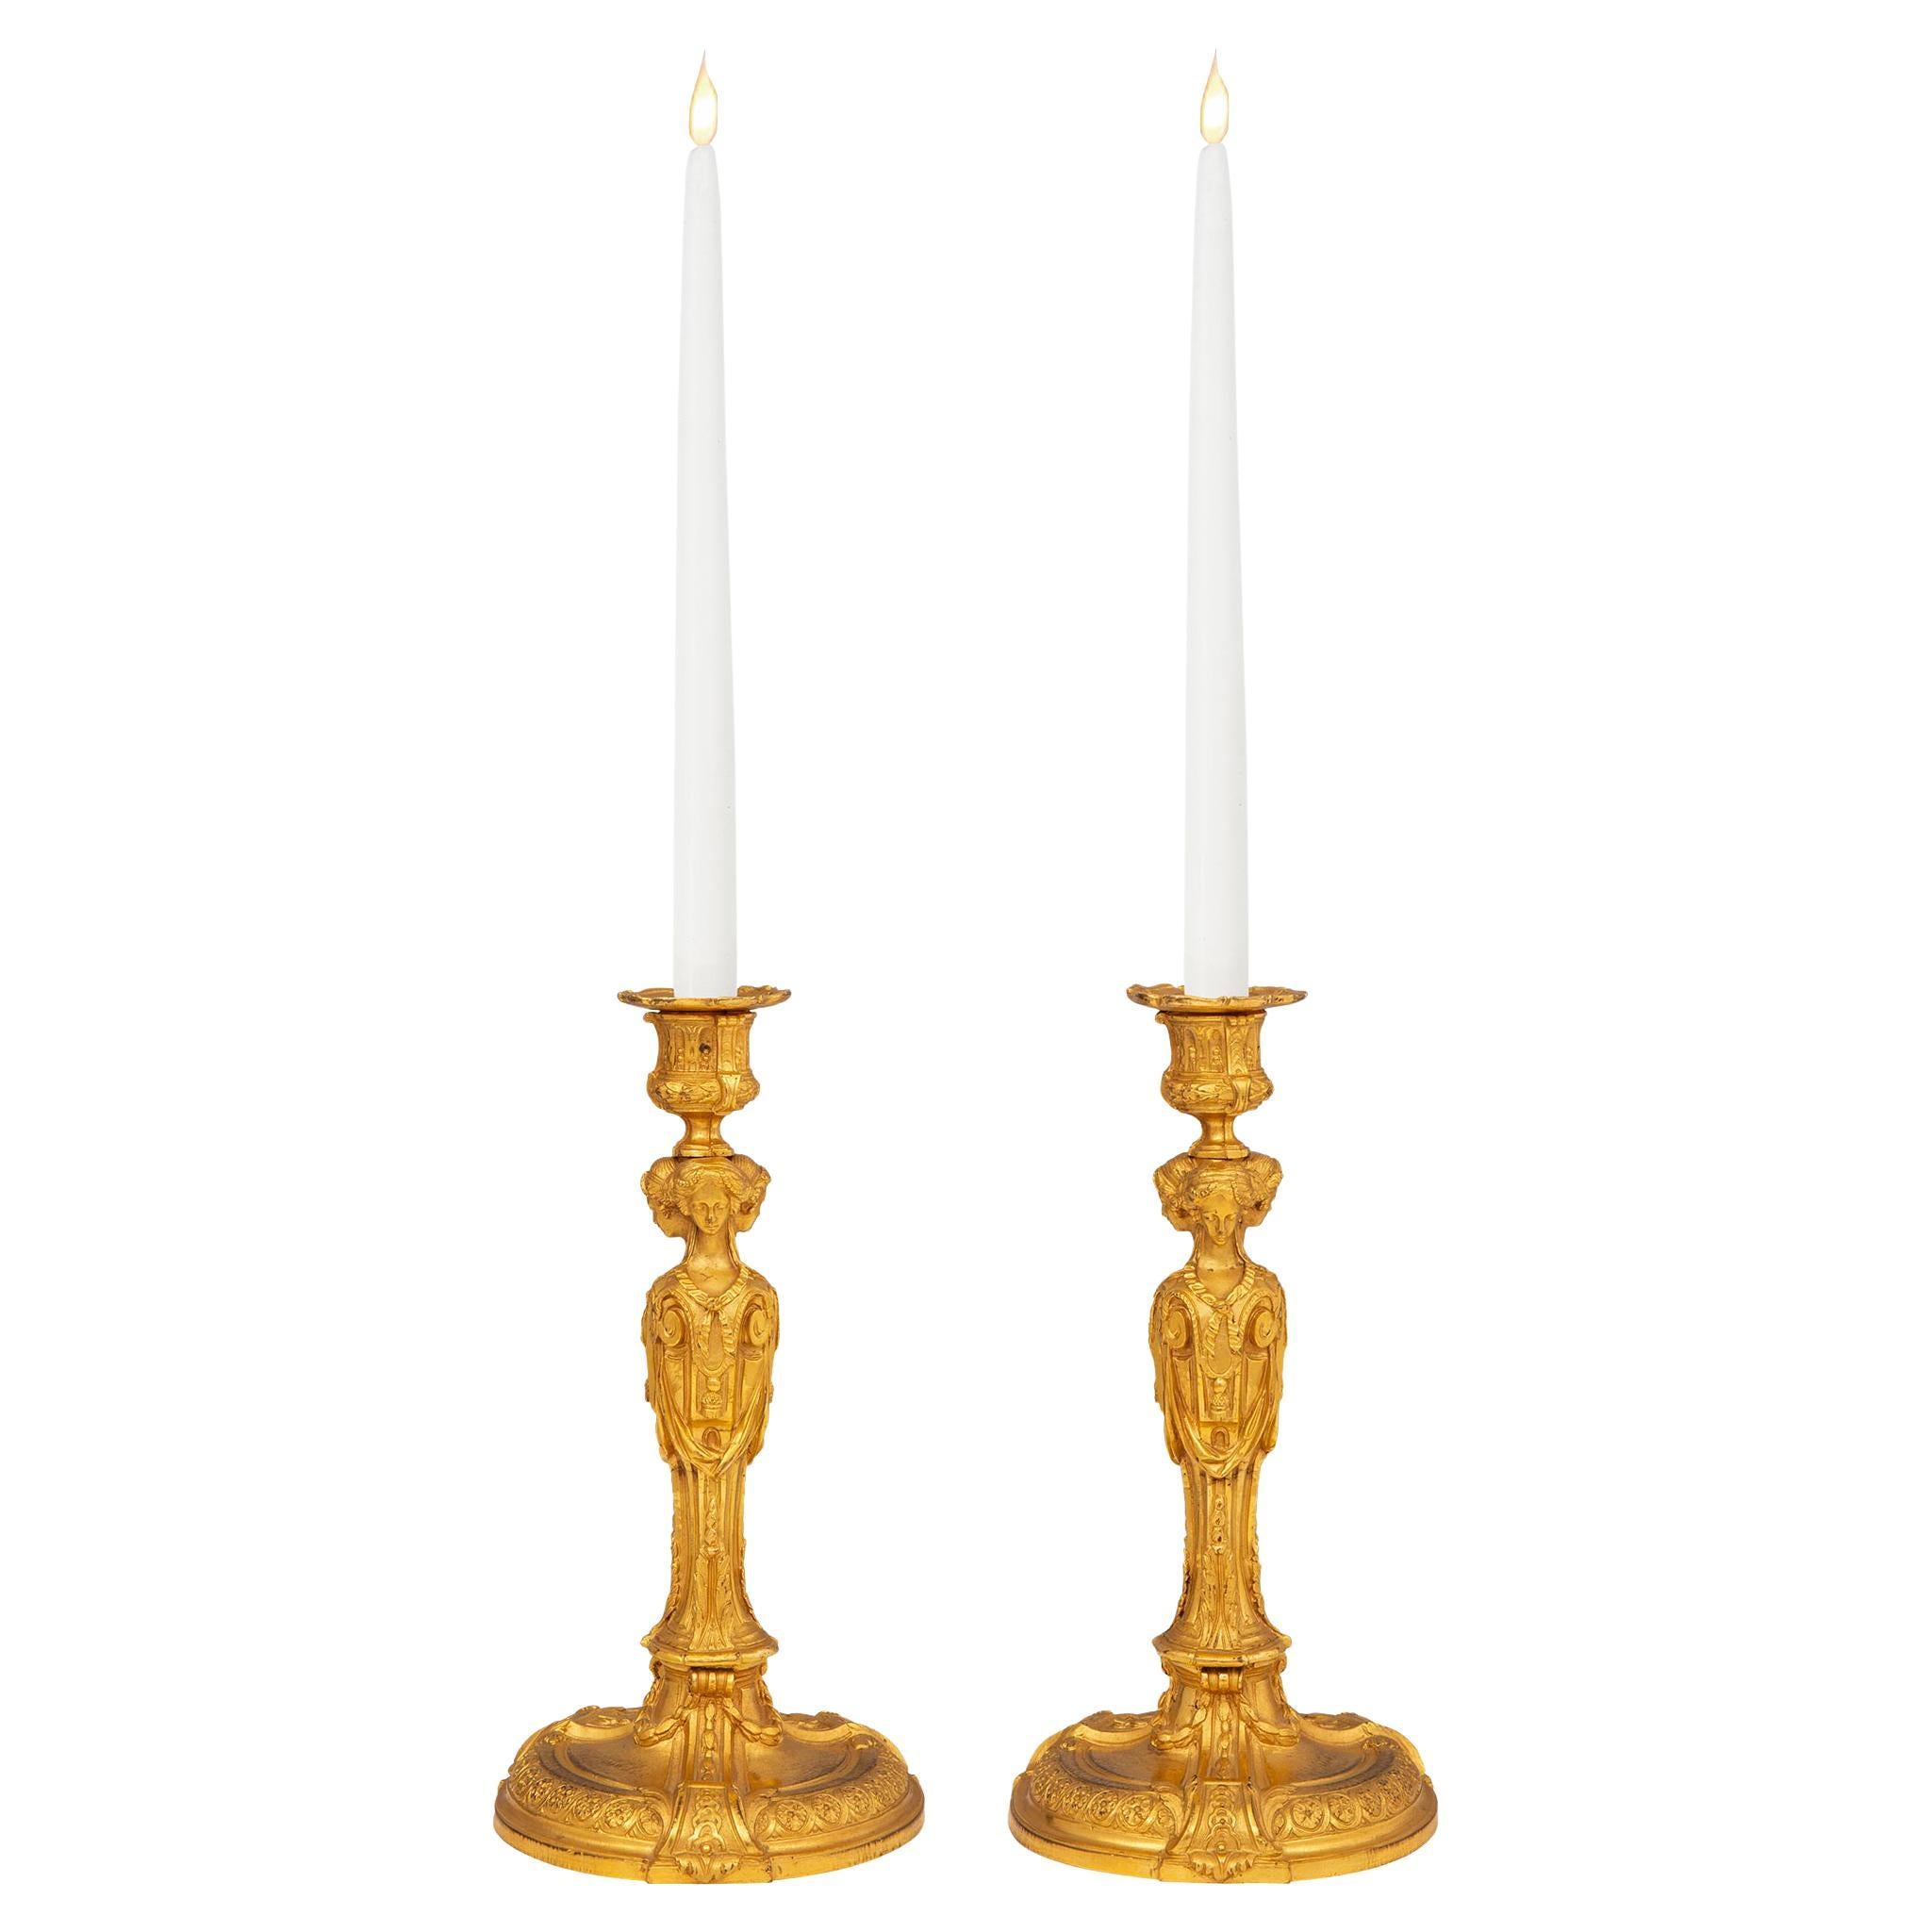 Pair of Early 19th Century Louis XVI Style Ormolu Candlesticks